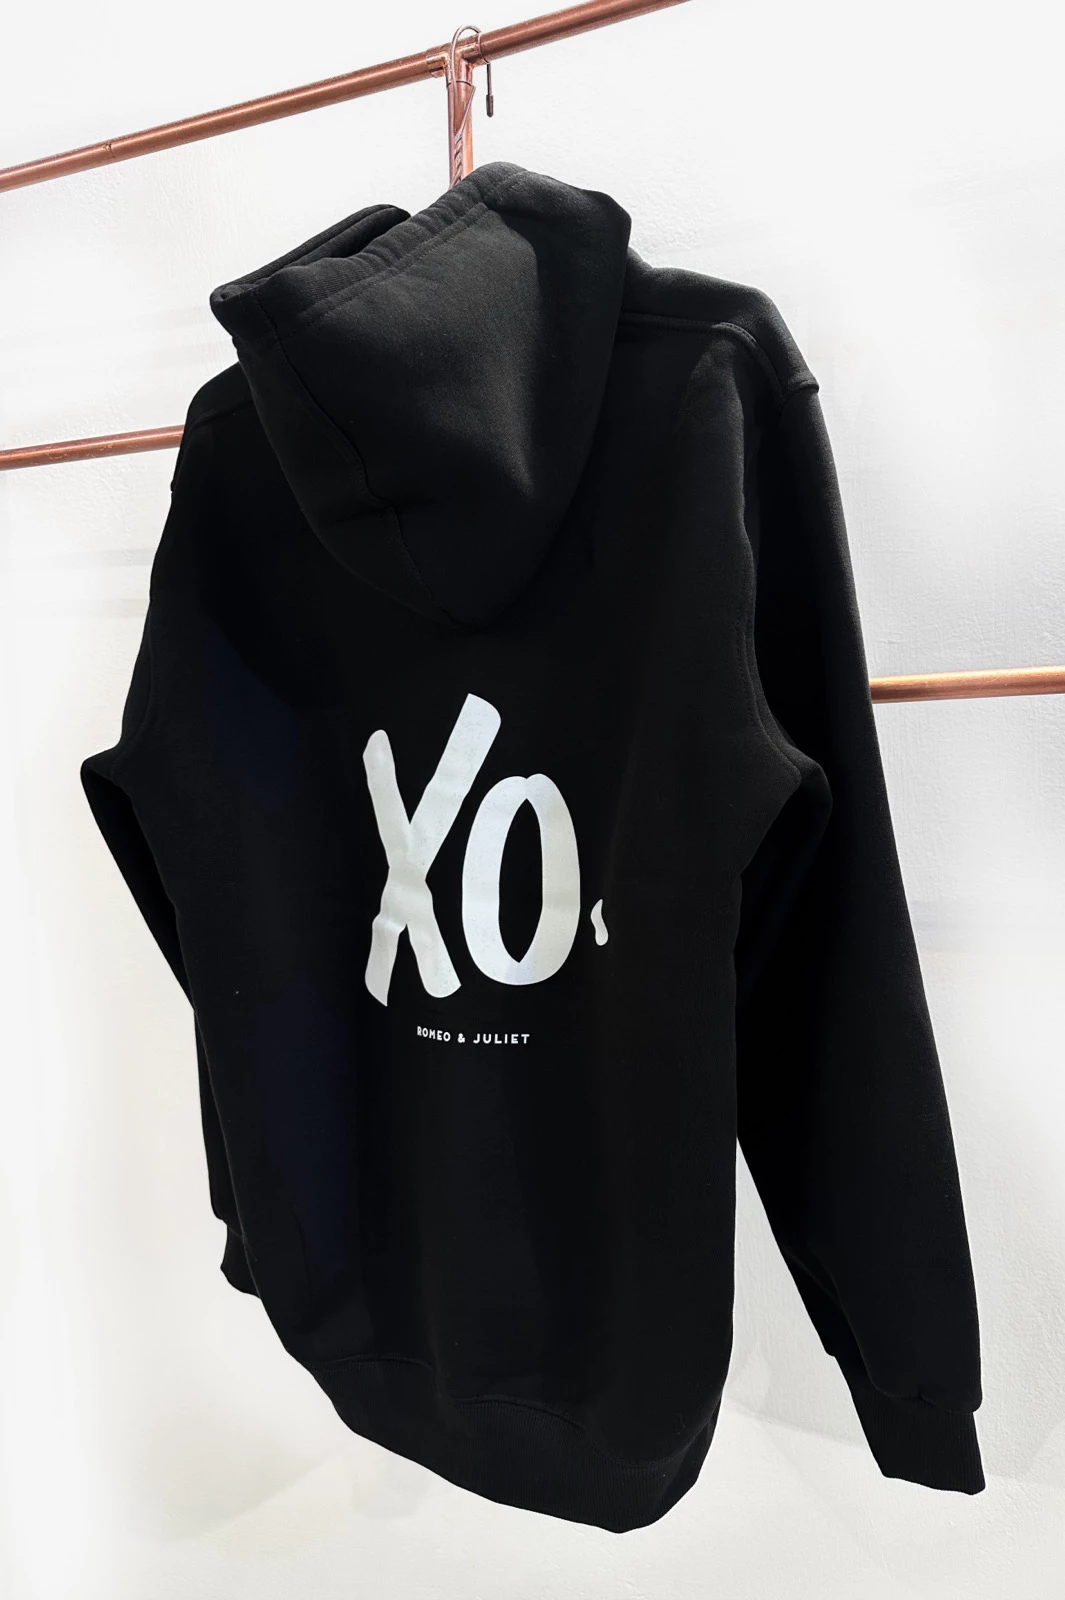 The "XO." Jacket